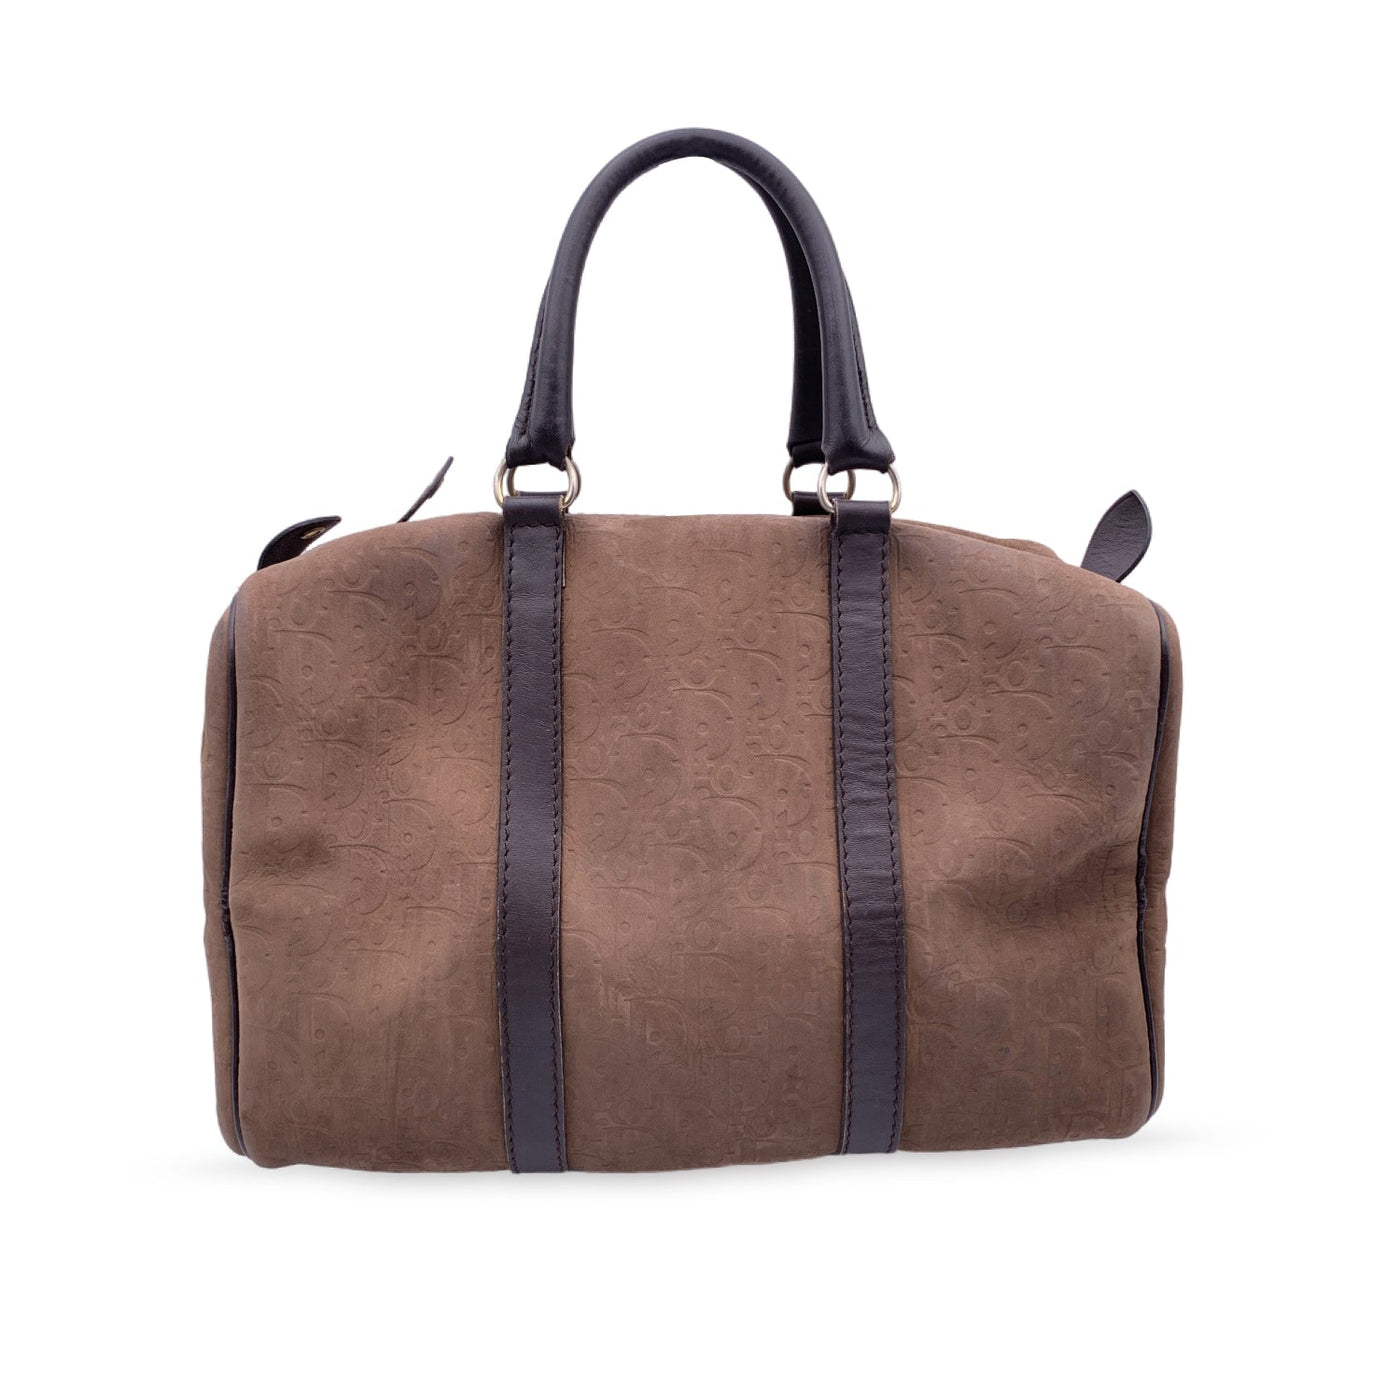 Vintage Dior Oblique Boston bag, Size 25 cm, Color: Brown